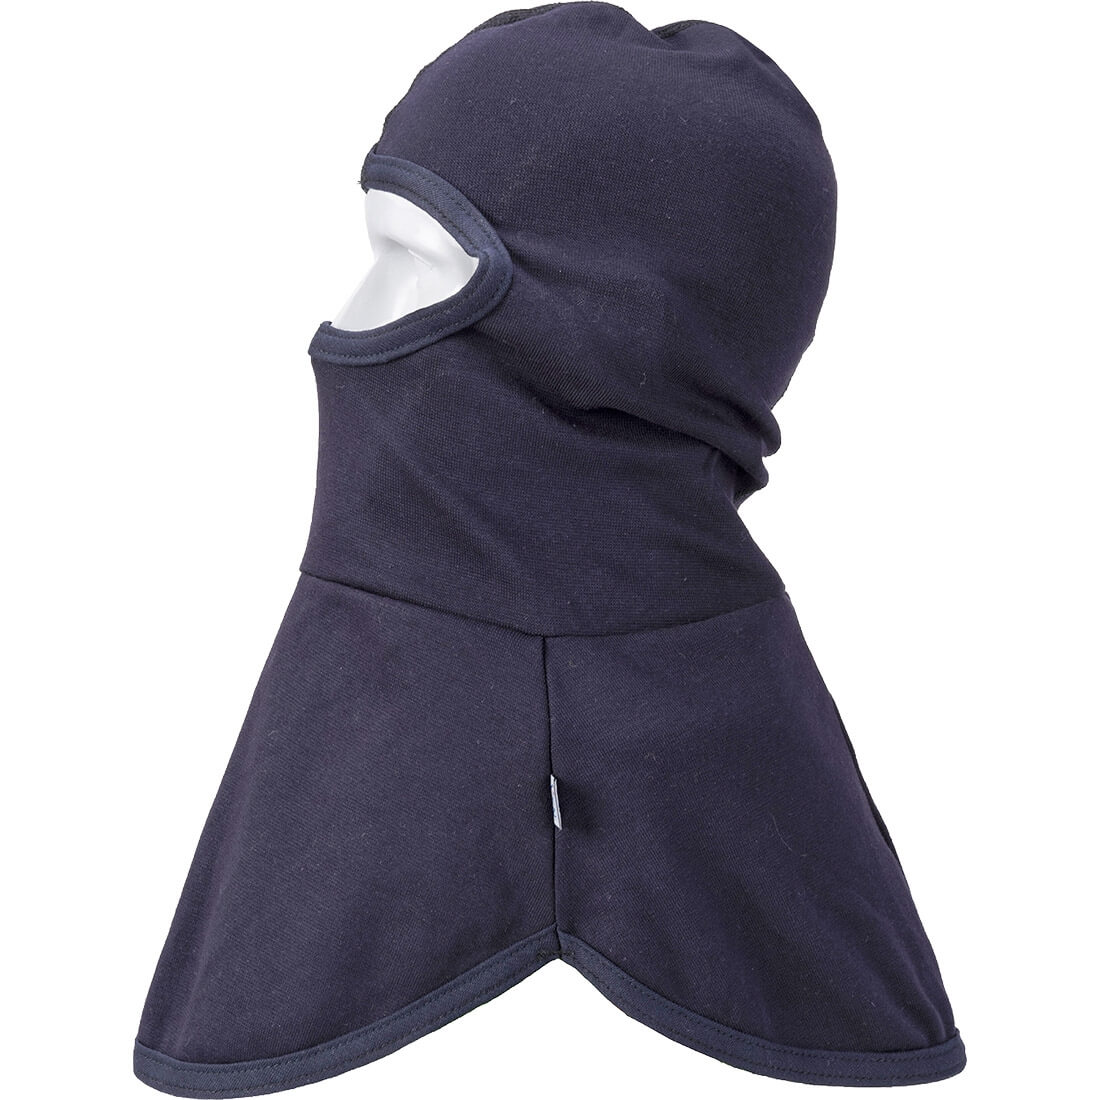 FR Anti-Static Balaclava Hood - Safetywear